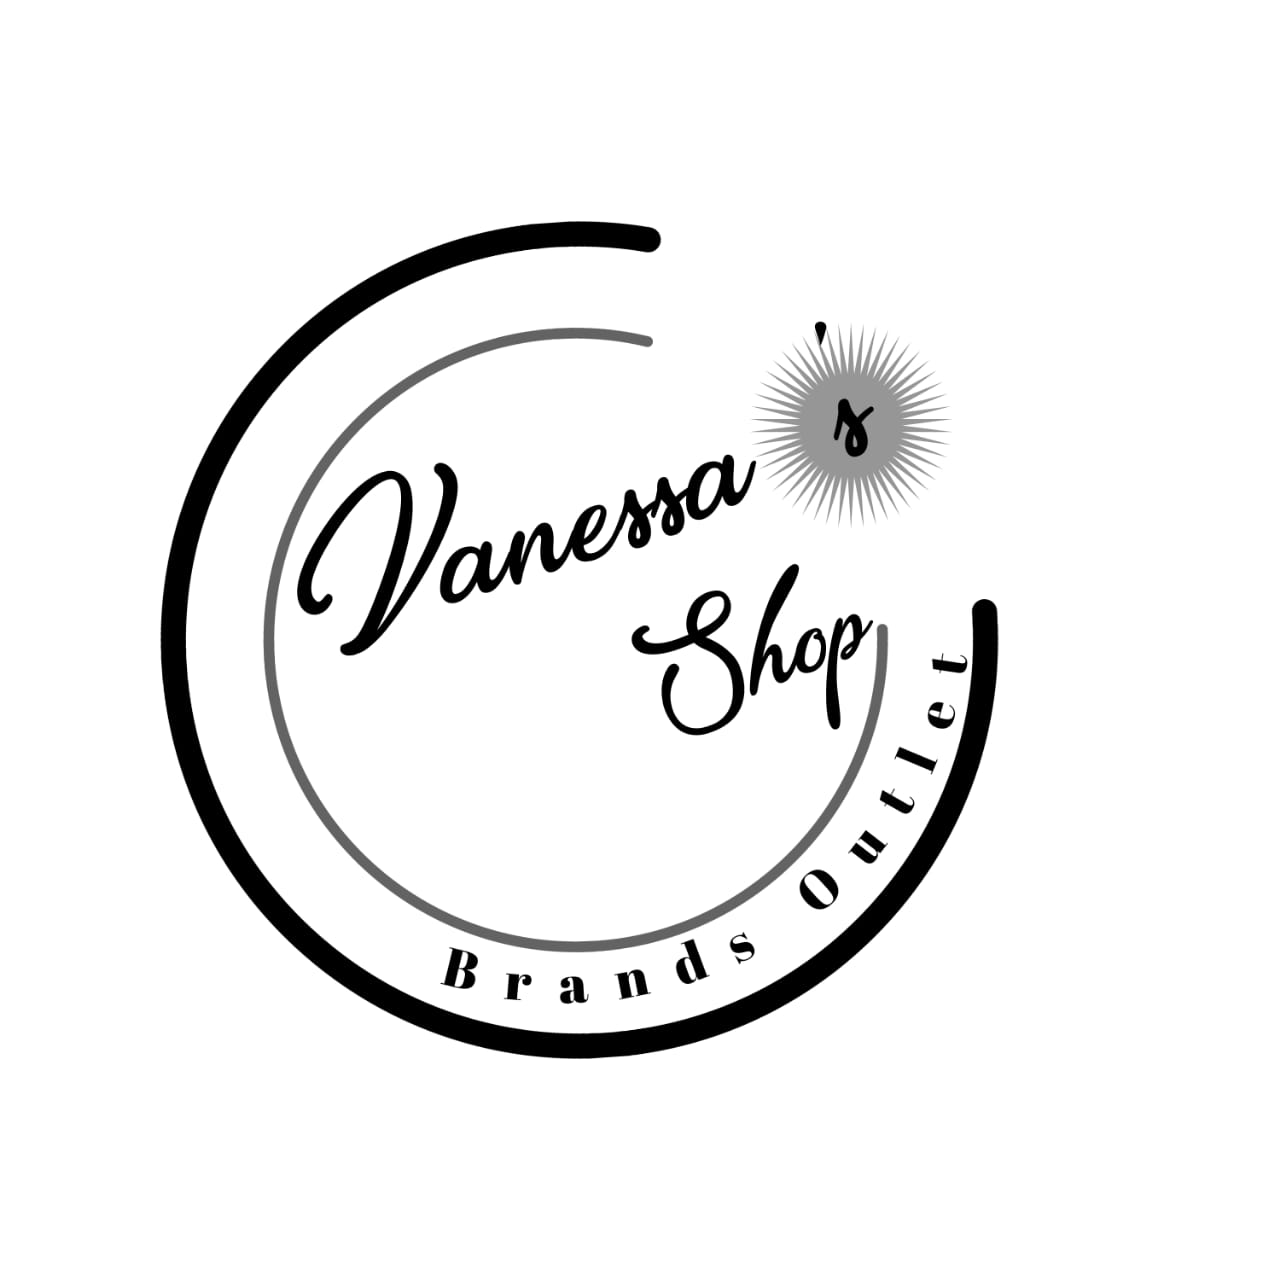 Vanessa's Shop Brands Outlet